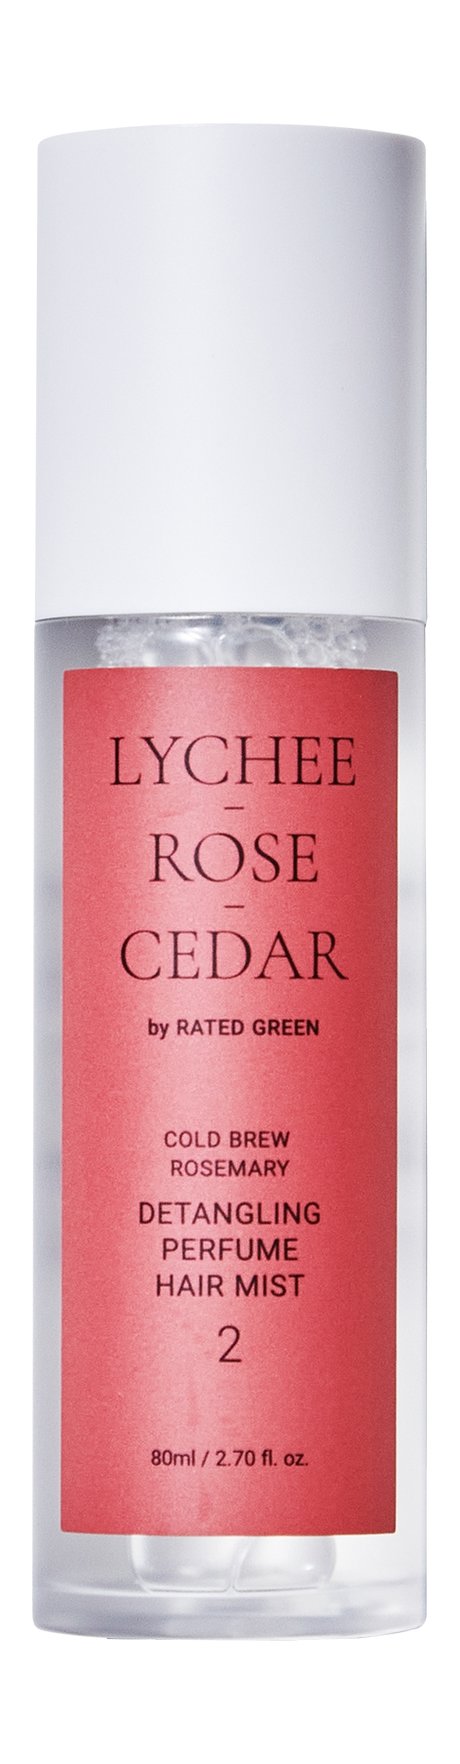 rated green detangling perfume hair mist 2 - lychee-rose-cedar